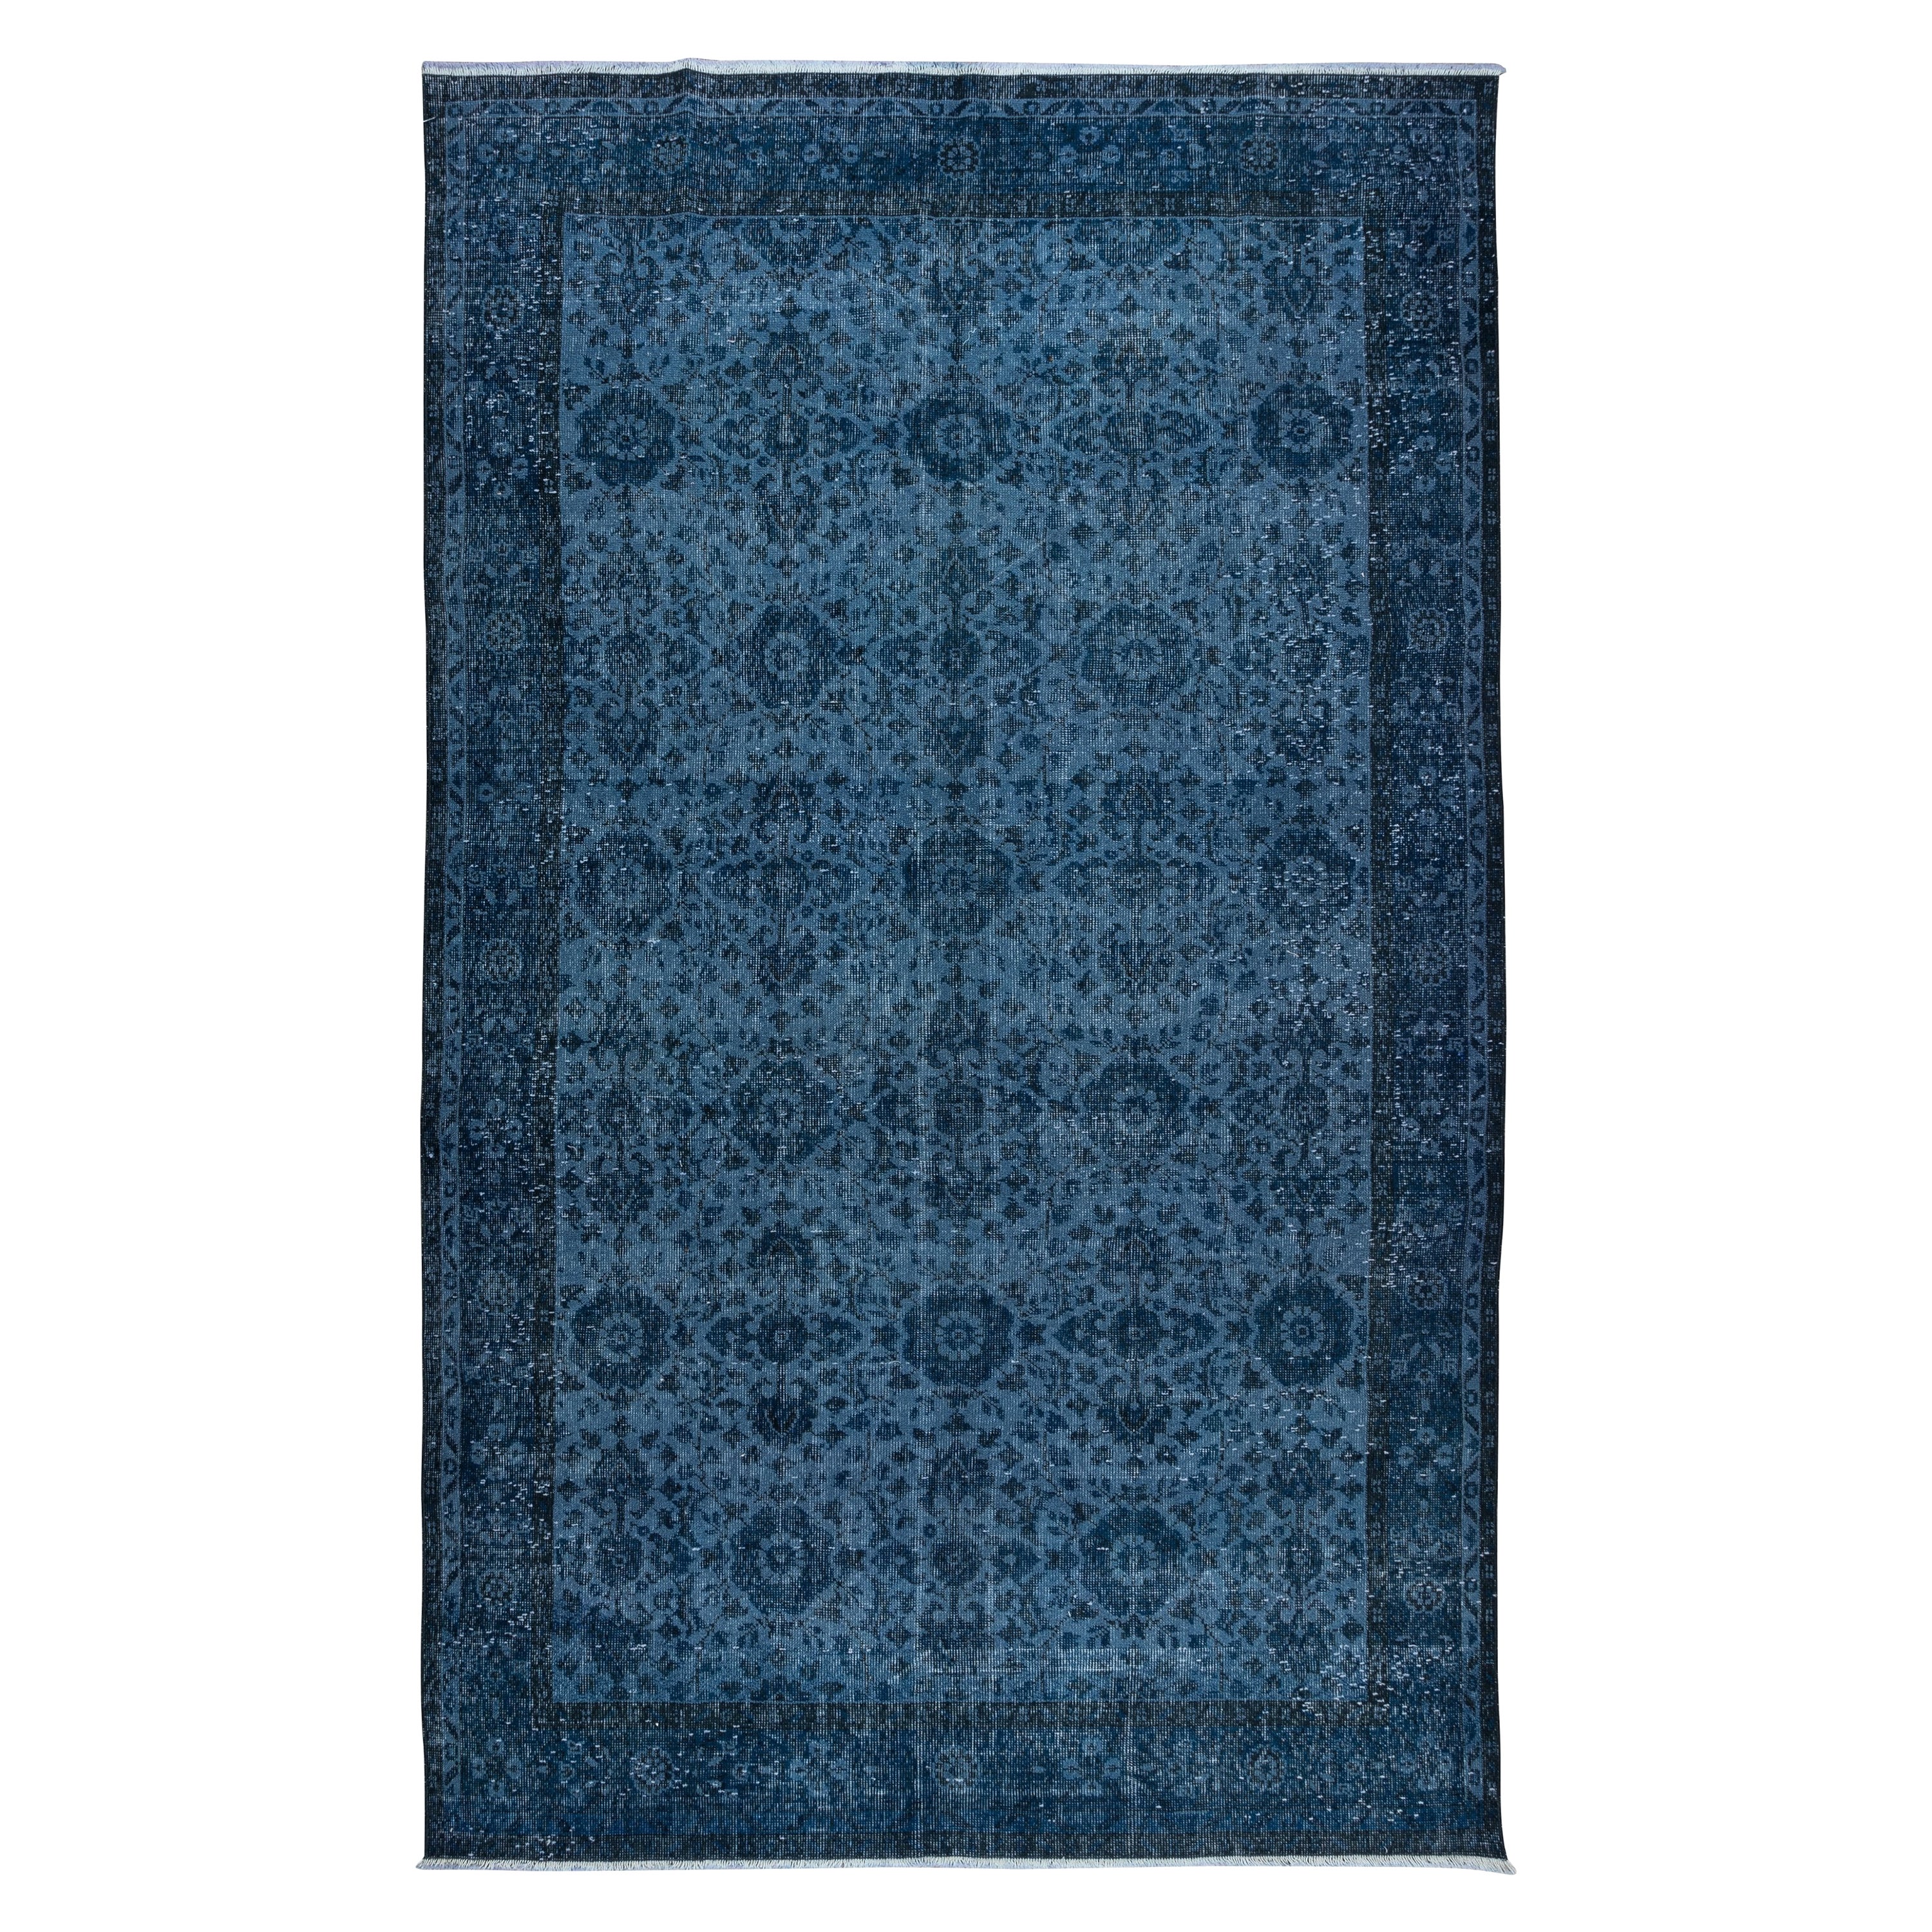 6.4x10.6 Ft Hand Knotted Floral Rug, Blue Modern Turkish Carpet for Living Room For Sale